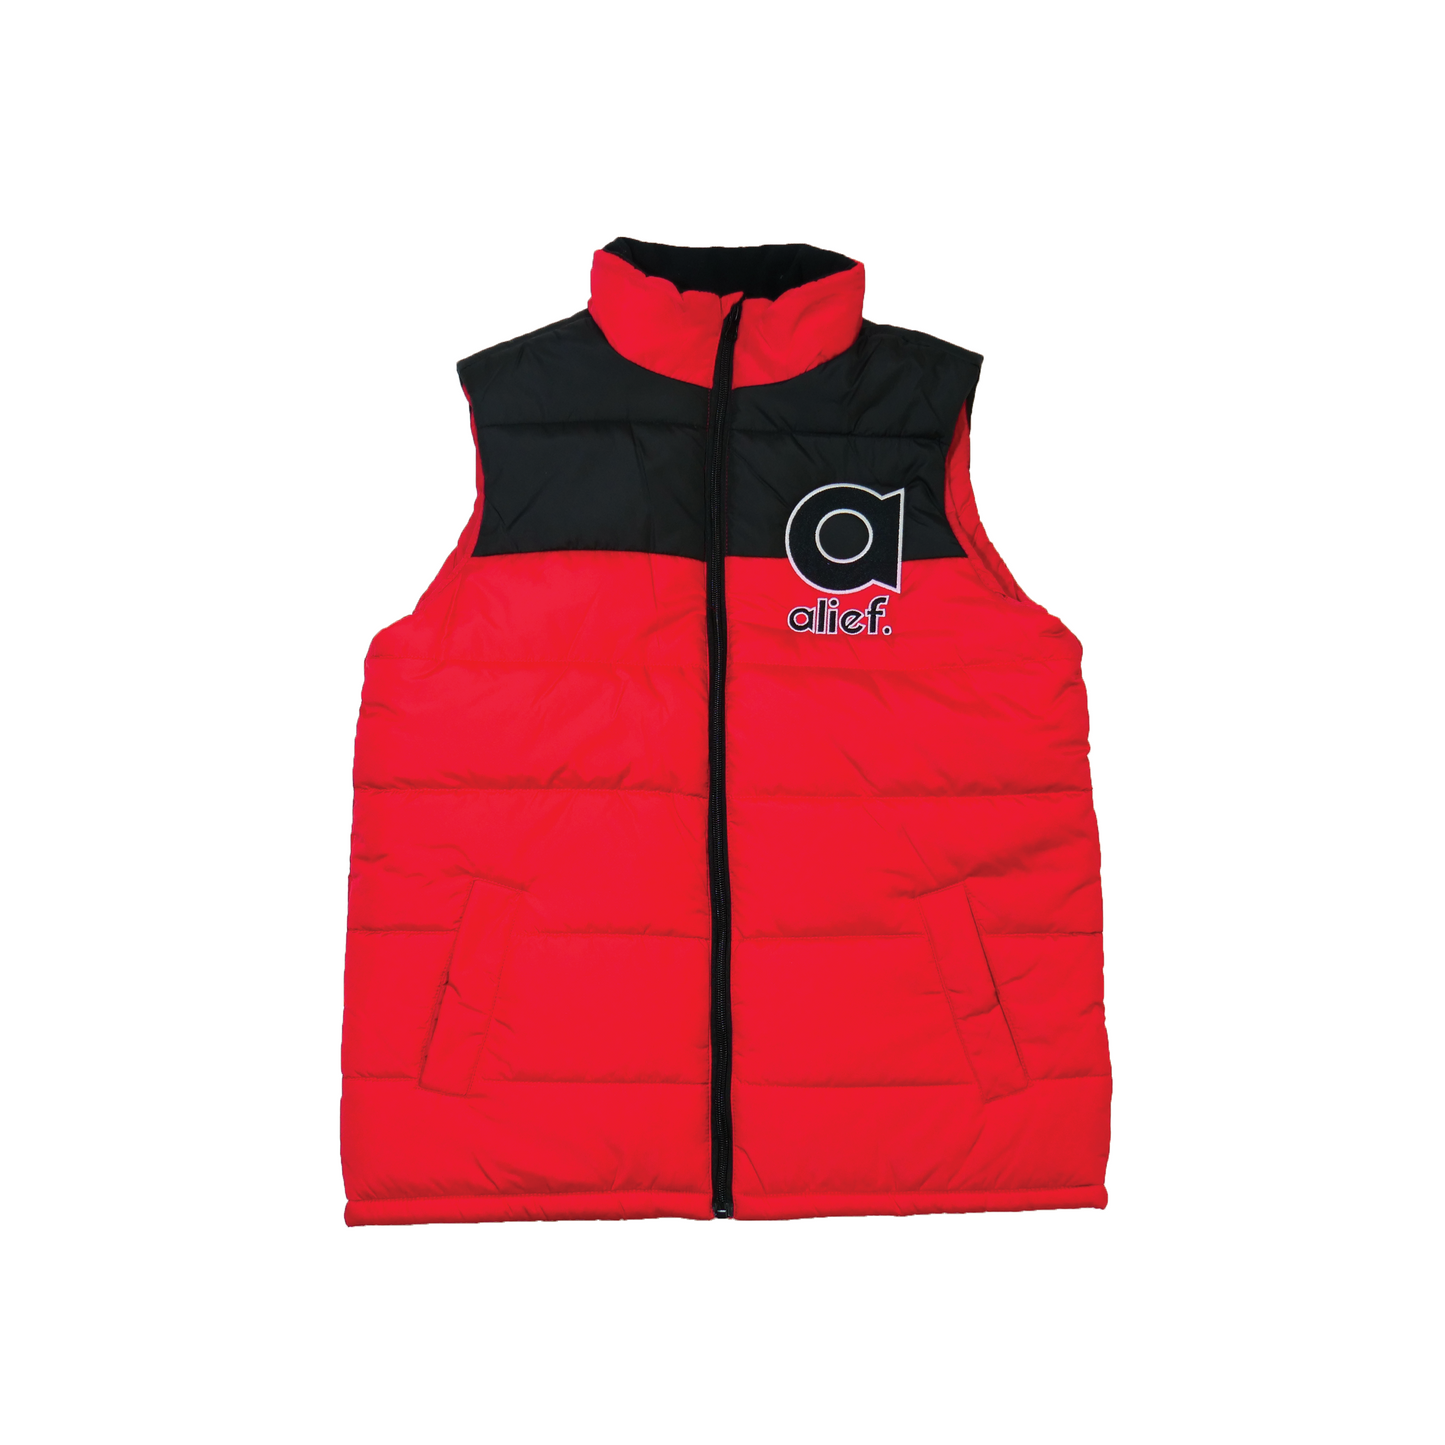 Applecity vest - Red